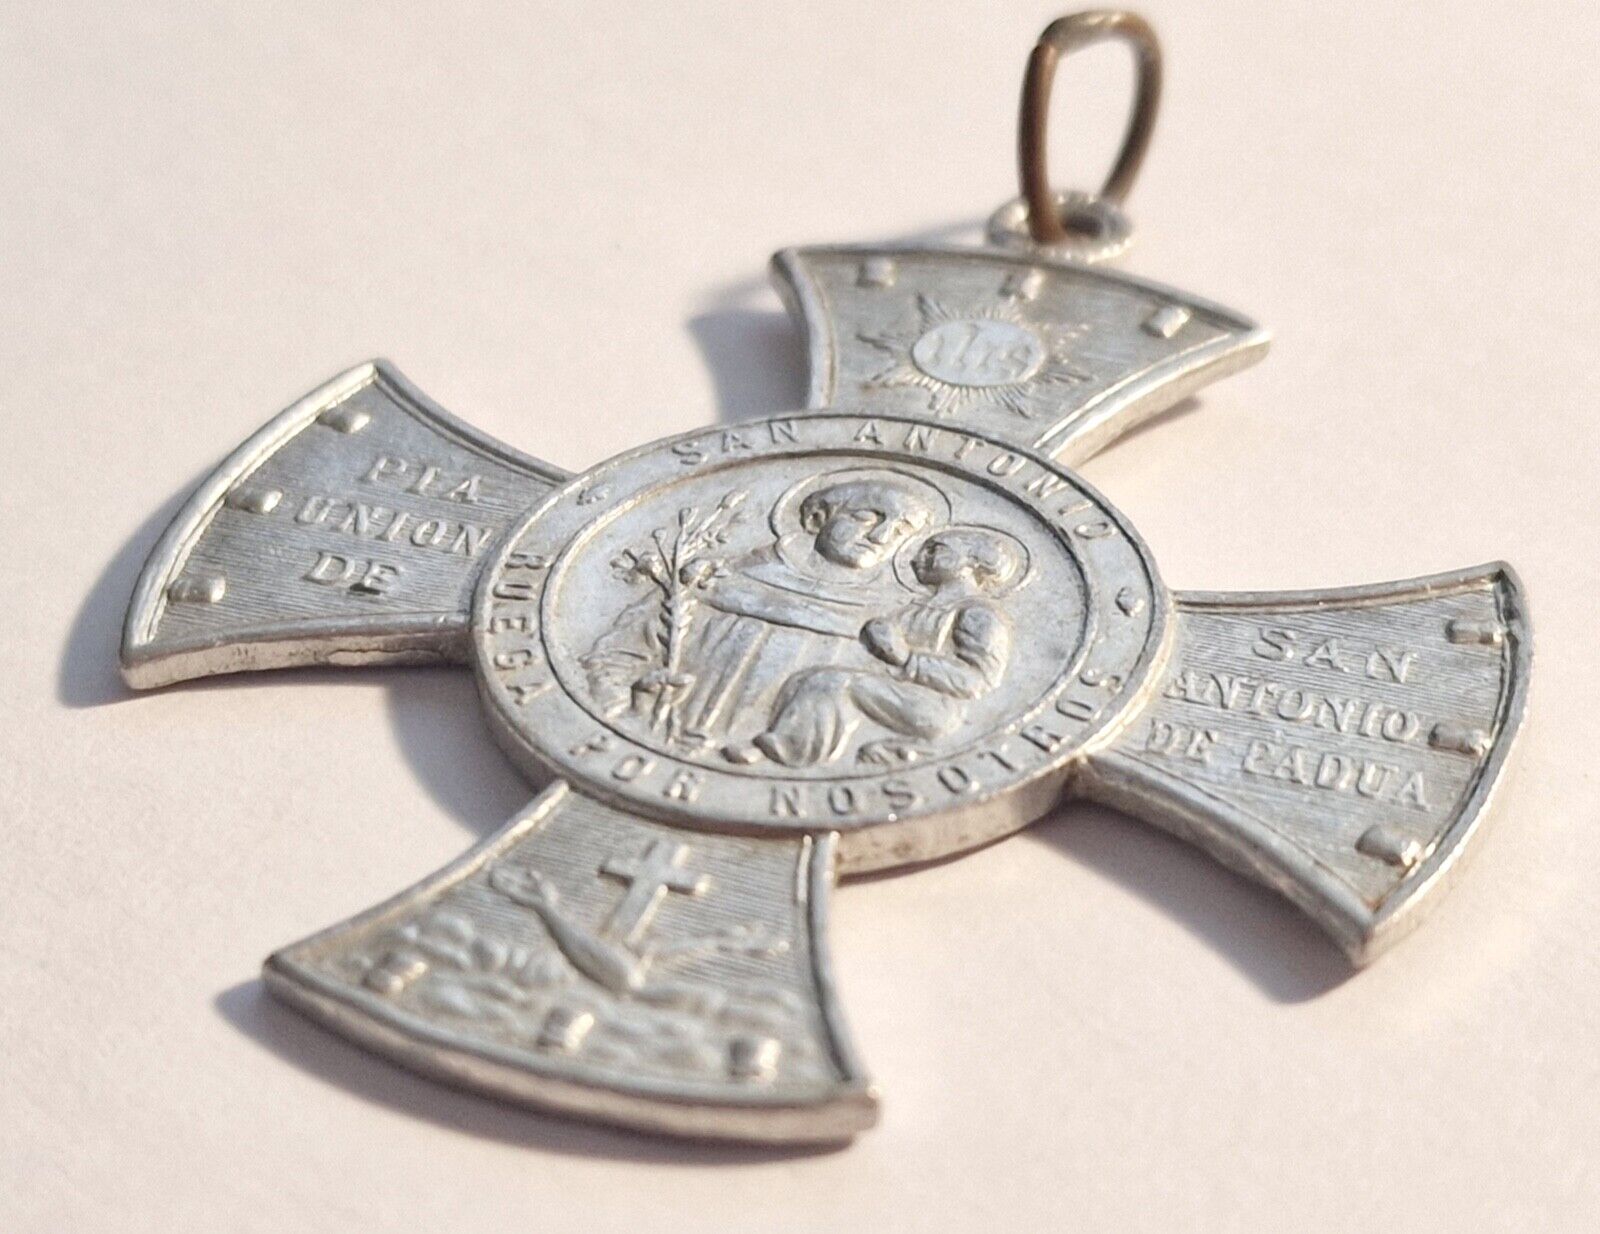 Antique San Antonio de Padua Cross Medal from 1892, Dedicated to Pope Leo XIII